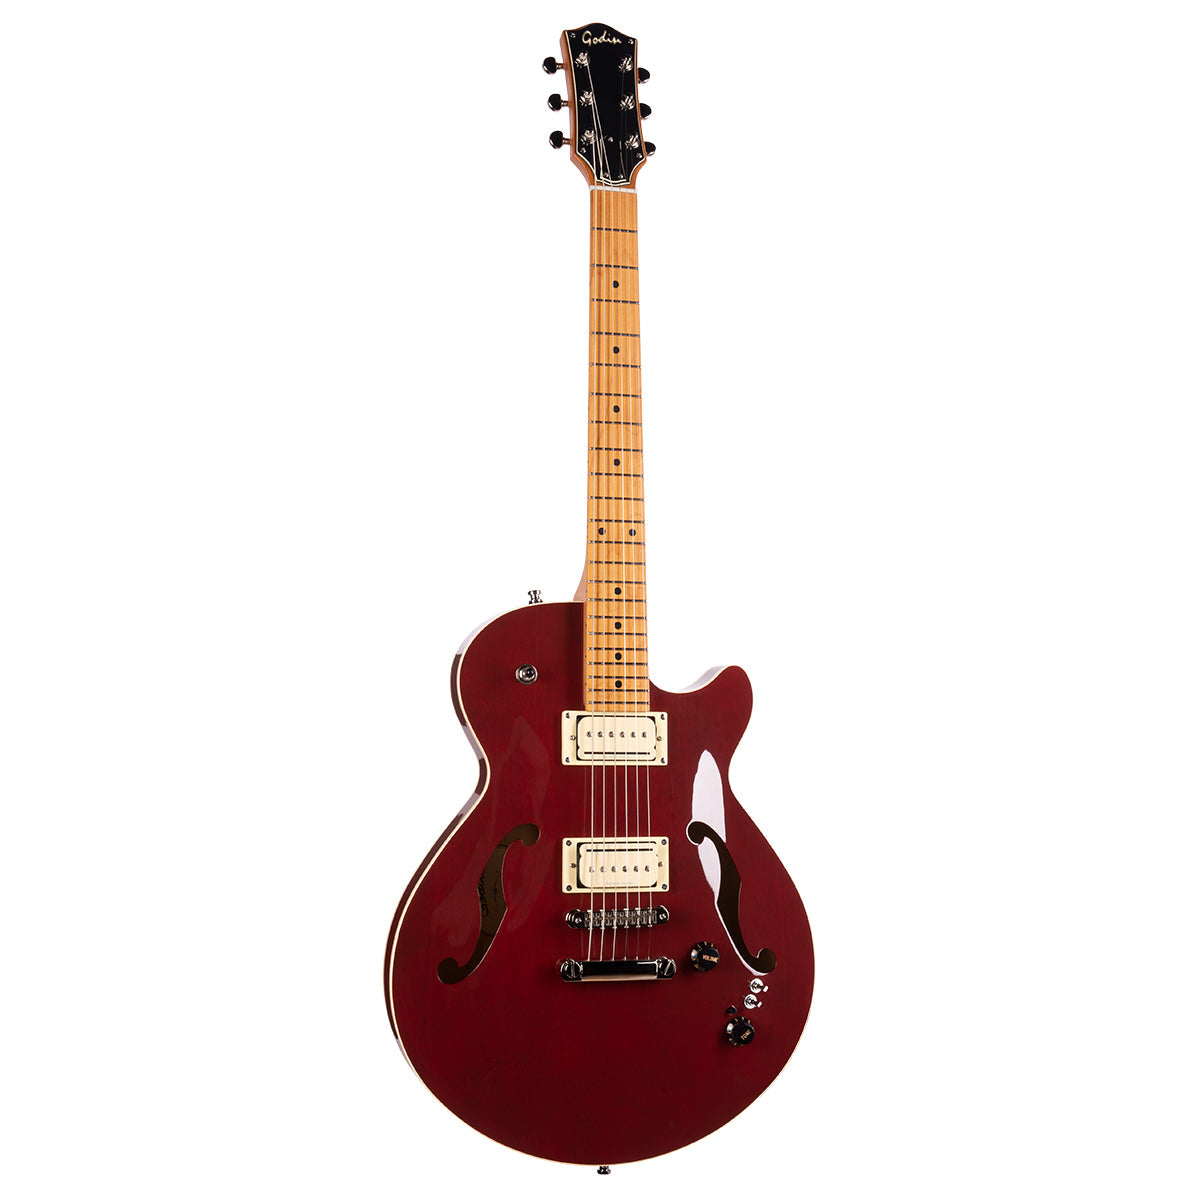 Godin Montreal Premiere Pro Semi-Acoustic Guitar ~ Aztek Red, Electric Guitar for sale at Richards Guitars.